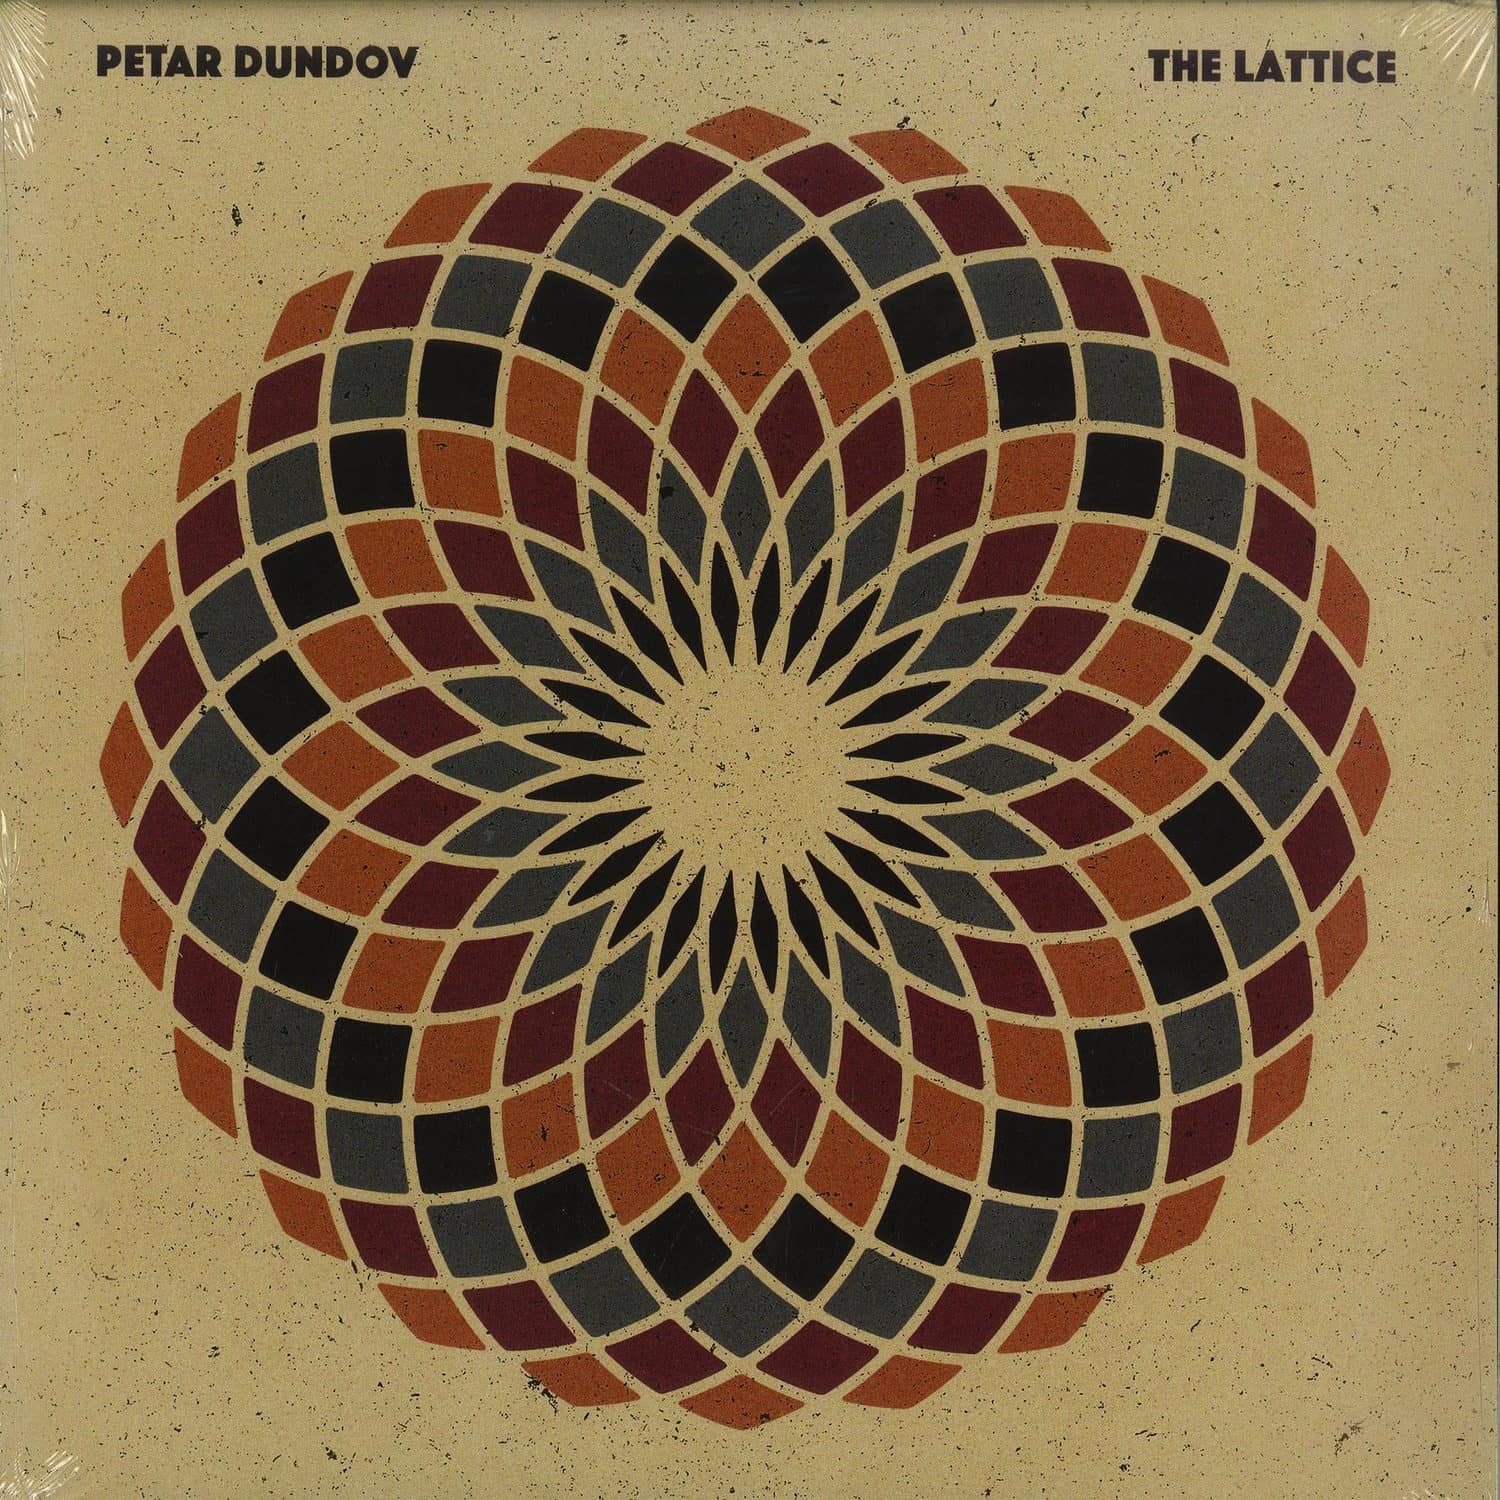 Petar Dundov - THE LATTICE 